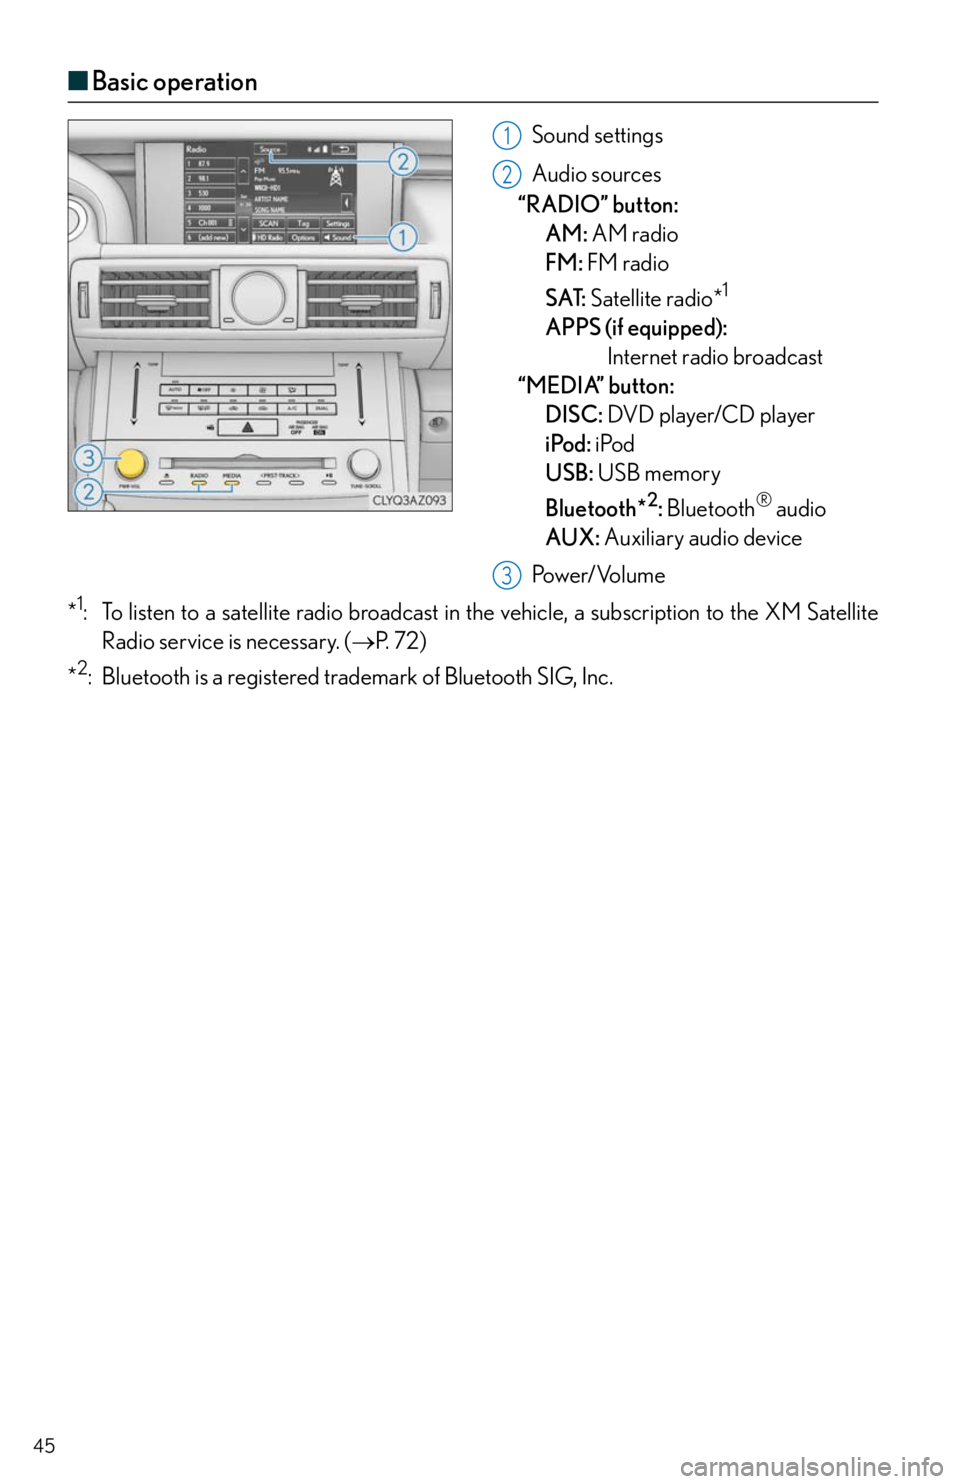 Lexus IS250 2014  Maintenance data (fuel, oil level, etc.) / LEXUS 2014 IS250,IS350 QUICK GUIDE  (OM53B33U) Service Manual 45
■Basic operation
Sound settings
Audio sources
“RADIO” button: 
AM: AM radio
FM: FM radio
SAT: Satellite radio*
1
APPS (if equipped): 
Internet radio broadcast
“MEDIA” button: 
DISC: DV